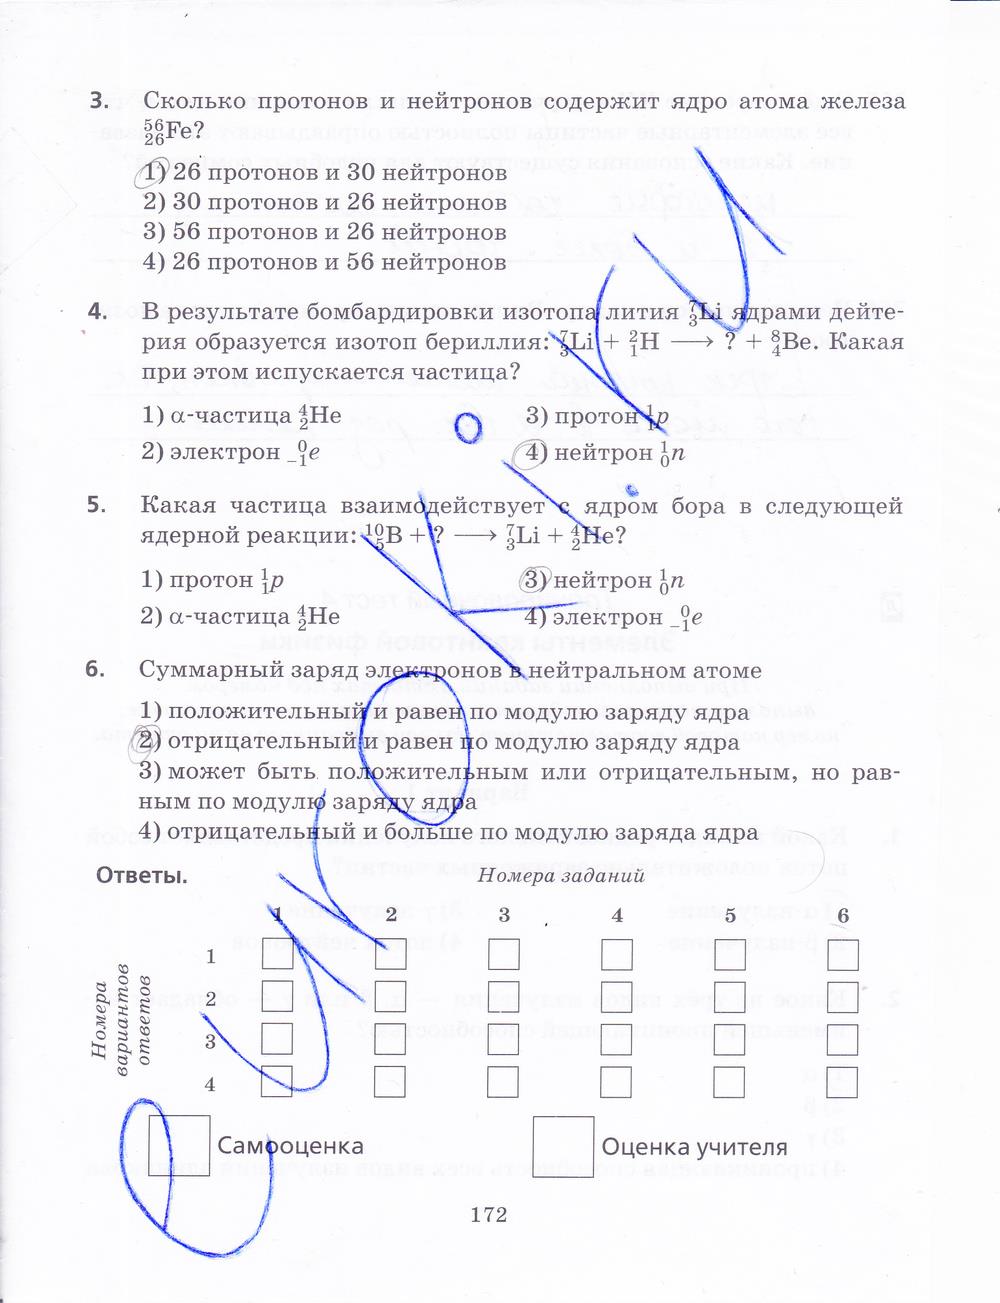 гдз 9 класс рабочая тетрадь страница 172 физика Пурышева, Важеевская, Чаругин